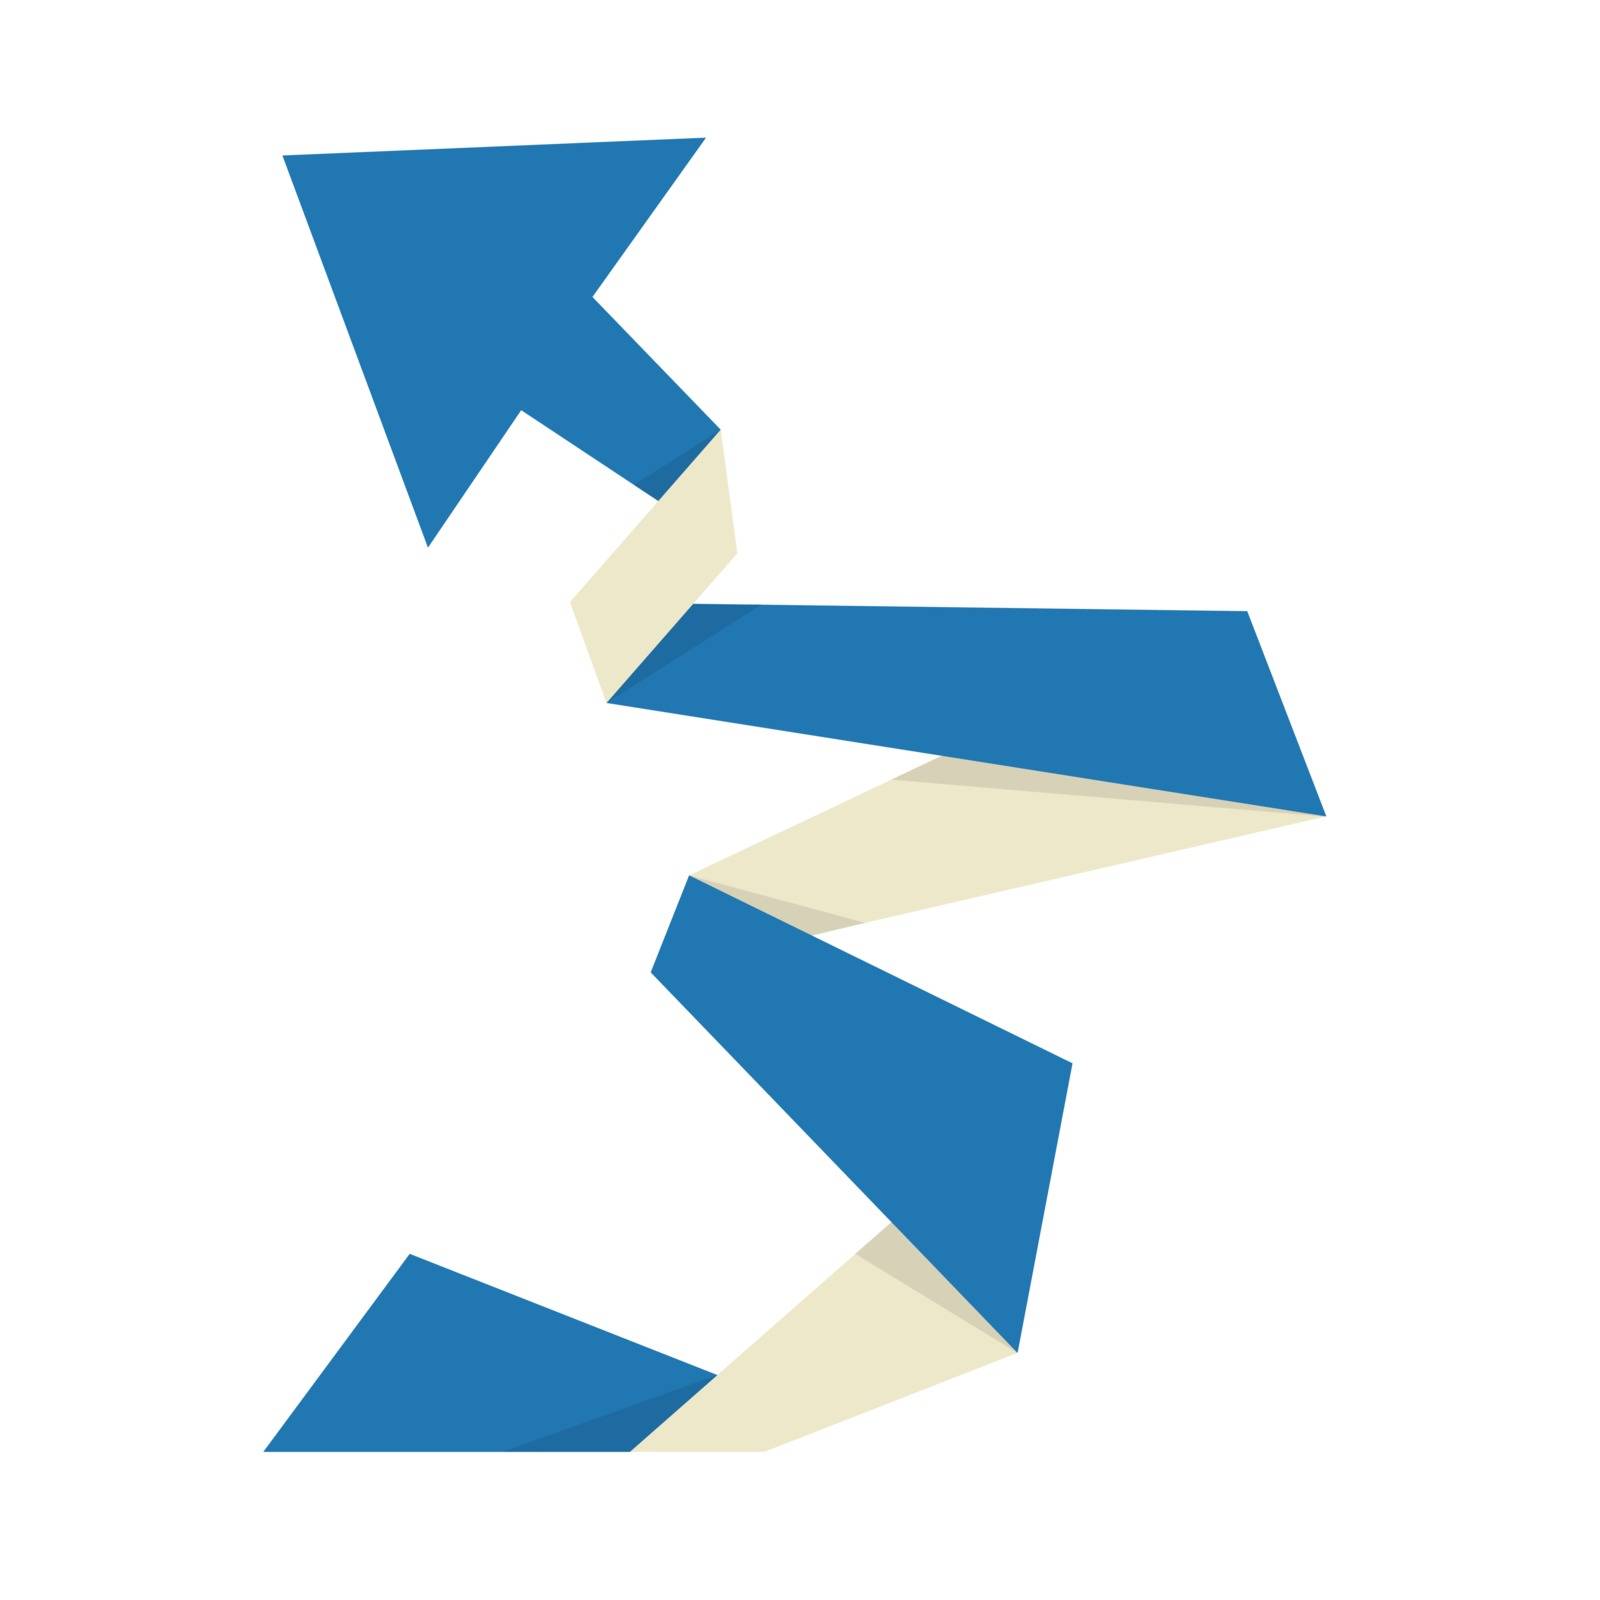 The origami style blue arrow